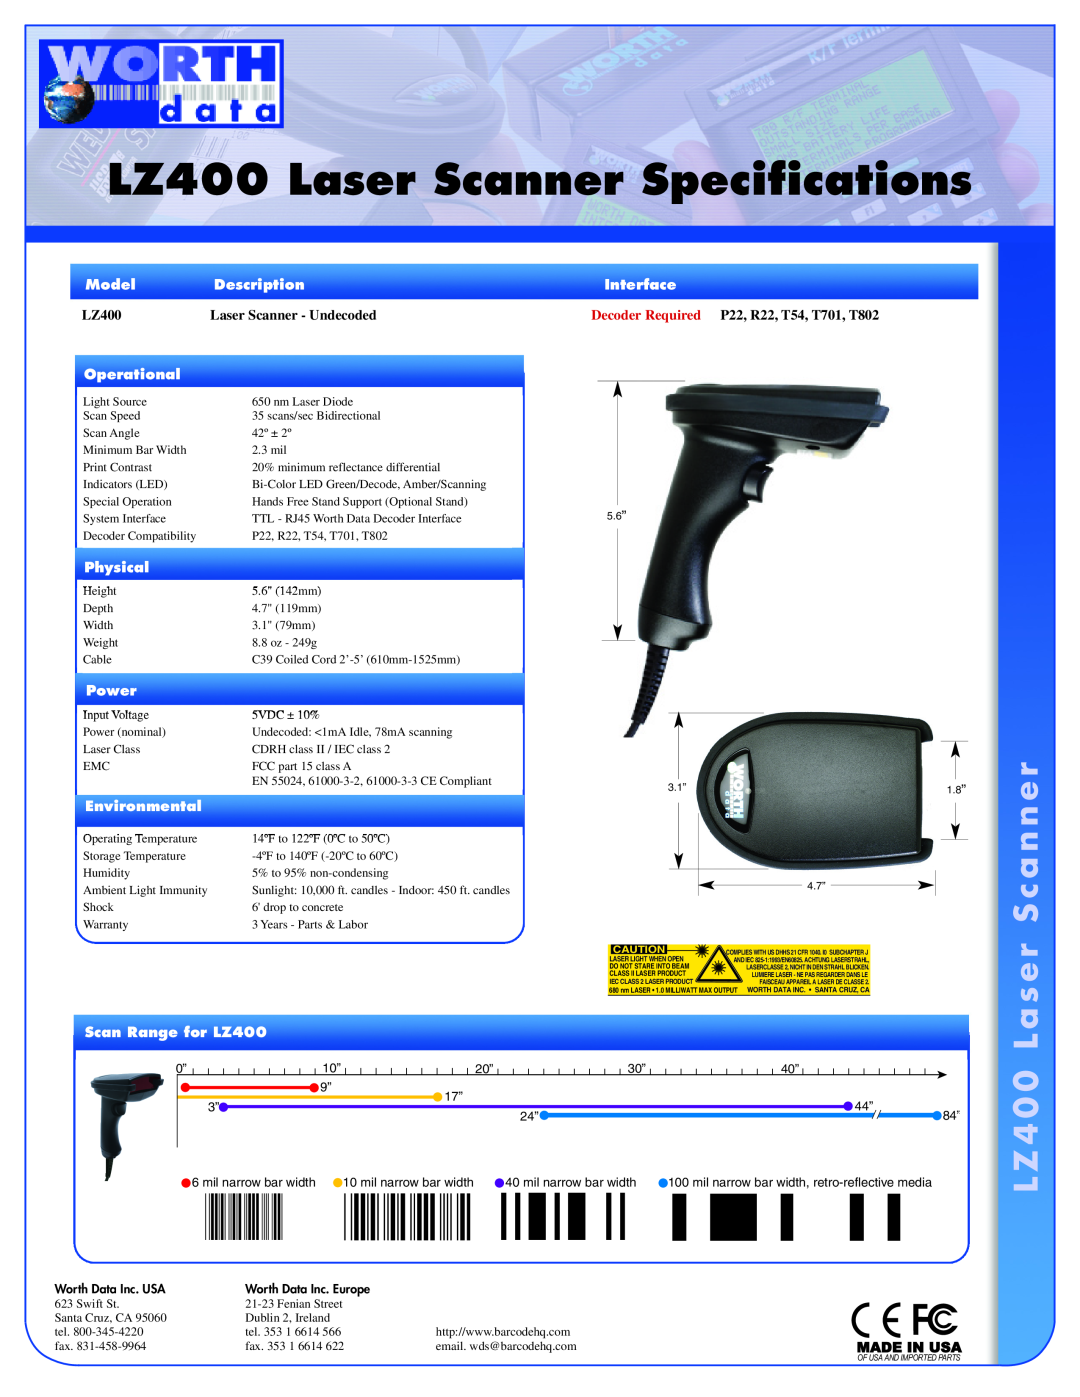 Worth Data specifications LZ400 Laser Scanner Specifications, a s e r S c a n n e r, L Z 4 0 0 L, Model, Description 